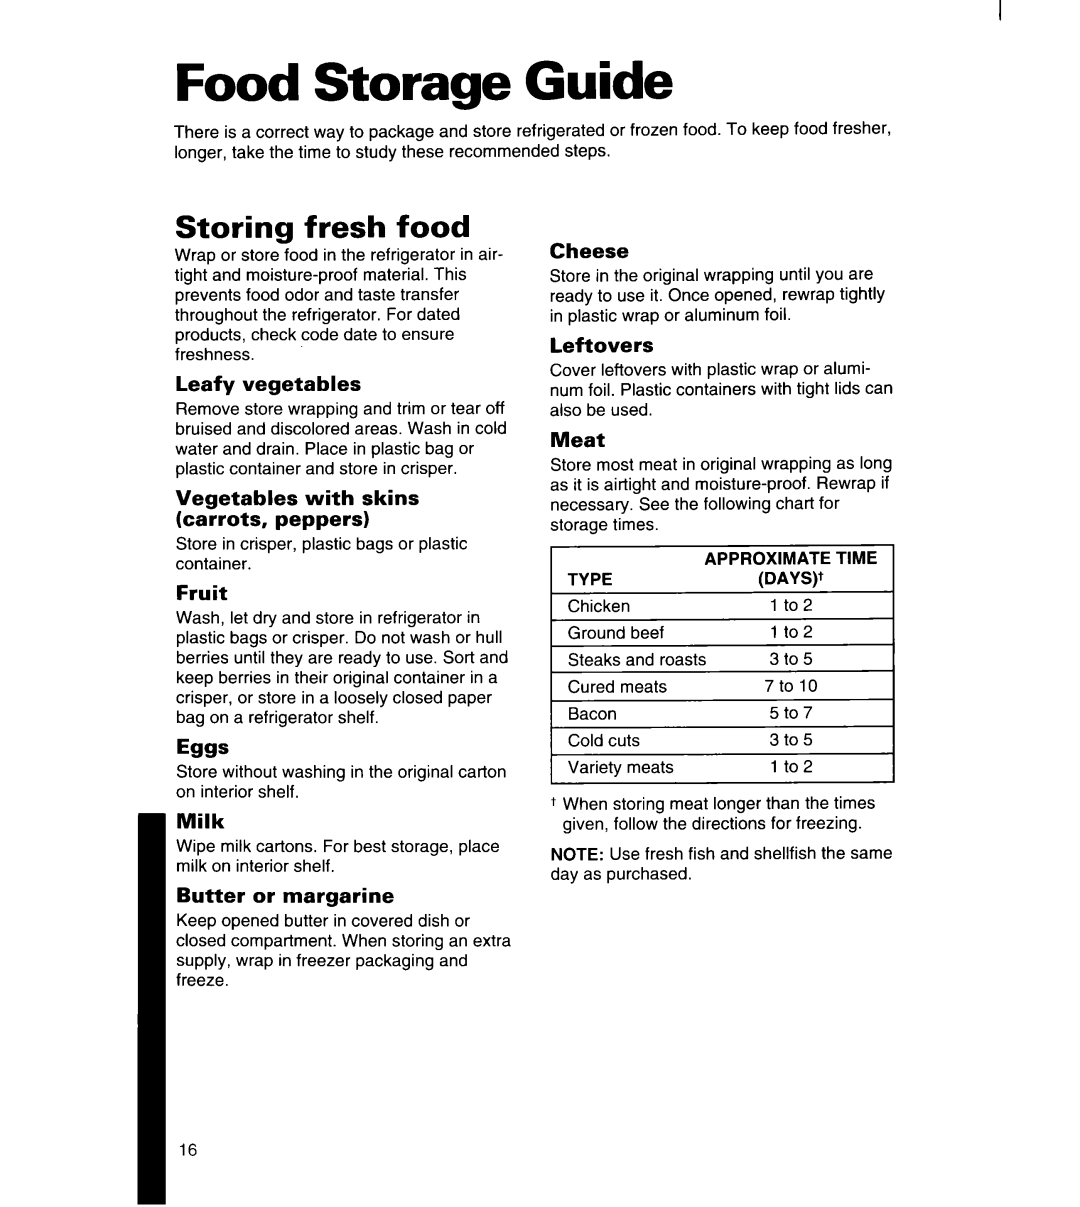 Whirlpool 3ET14GK Food Storage Guide, Storing fresh food, Leafy vegetables, Vegetables with skins carrots, peppers, Fruit 